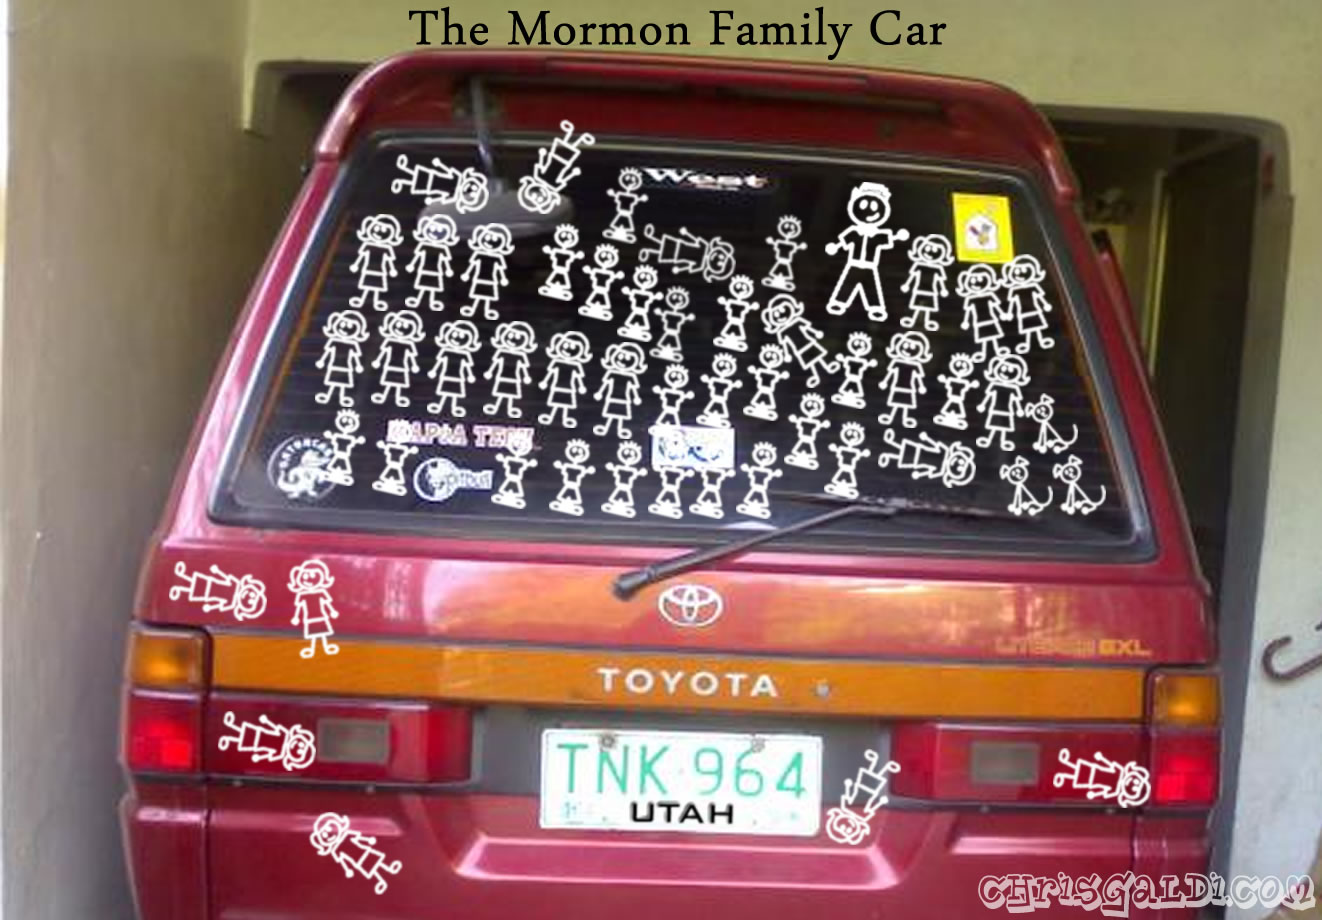 https://youngmormonfeminists.files.wordpress.com/2013/07/the-mormon-family-car.jpg